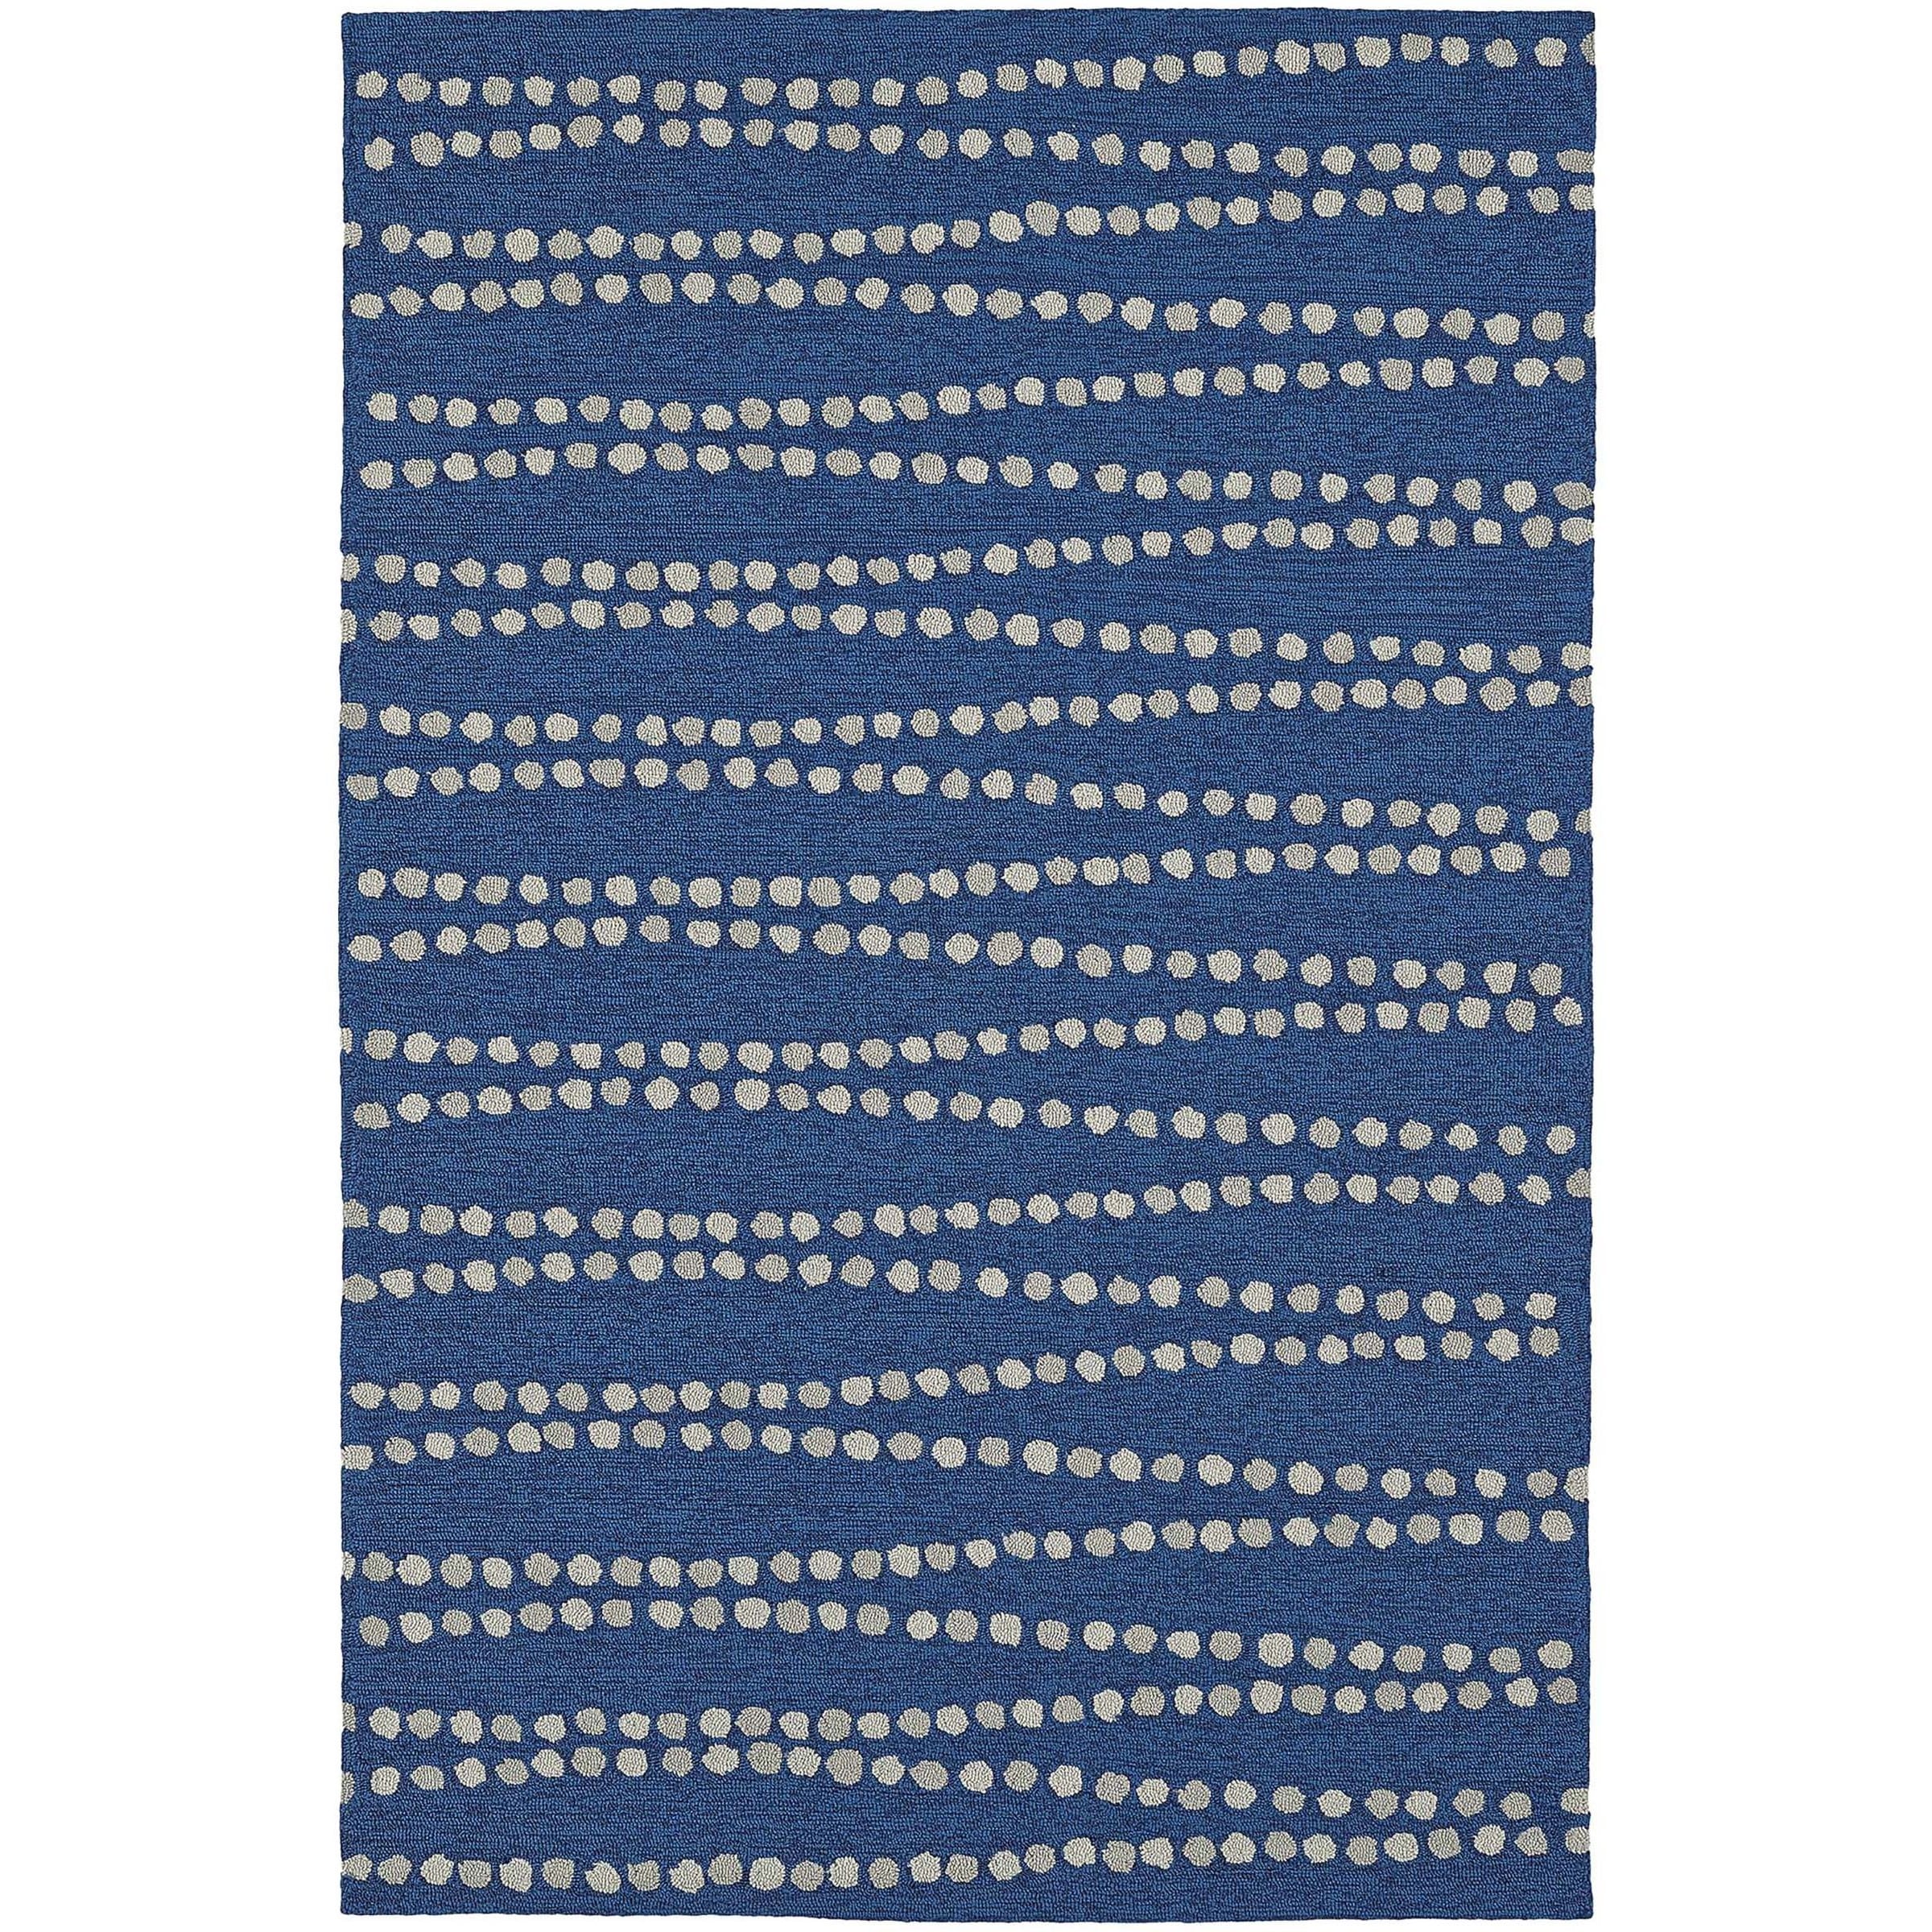 Addison Rugs Venice Dot Matrix Blue/Ivory Indoor-Outdoor Area Rug (5' x 7'6)